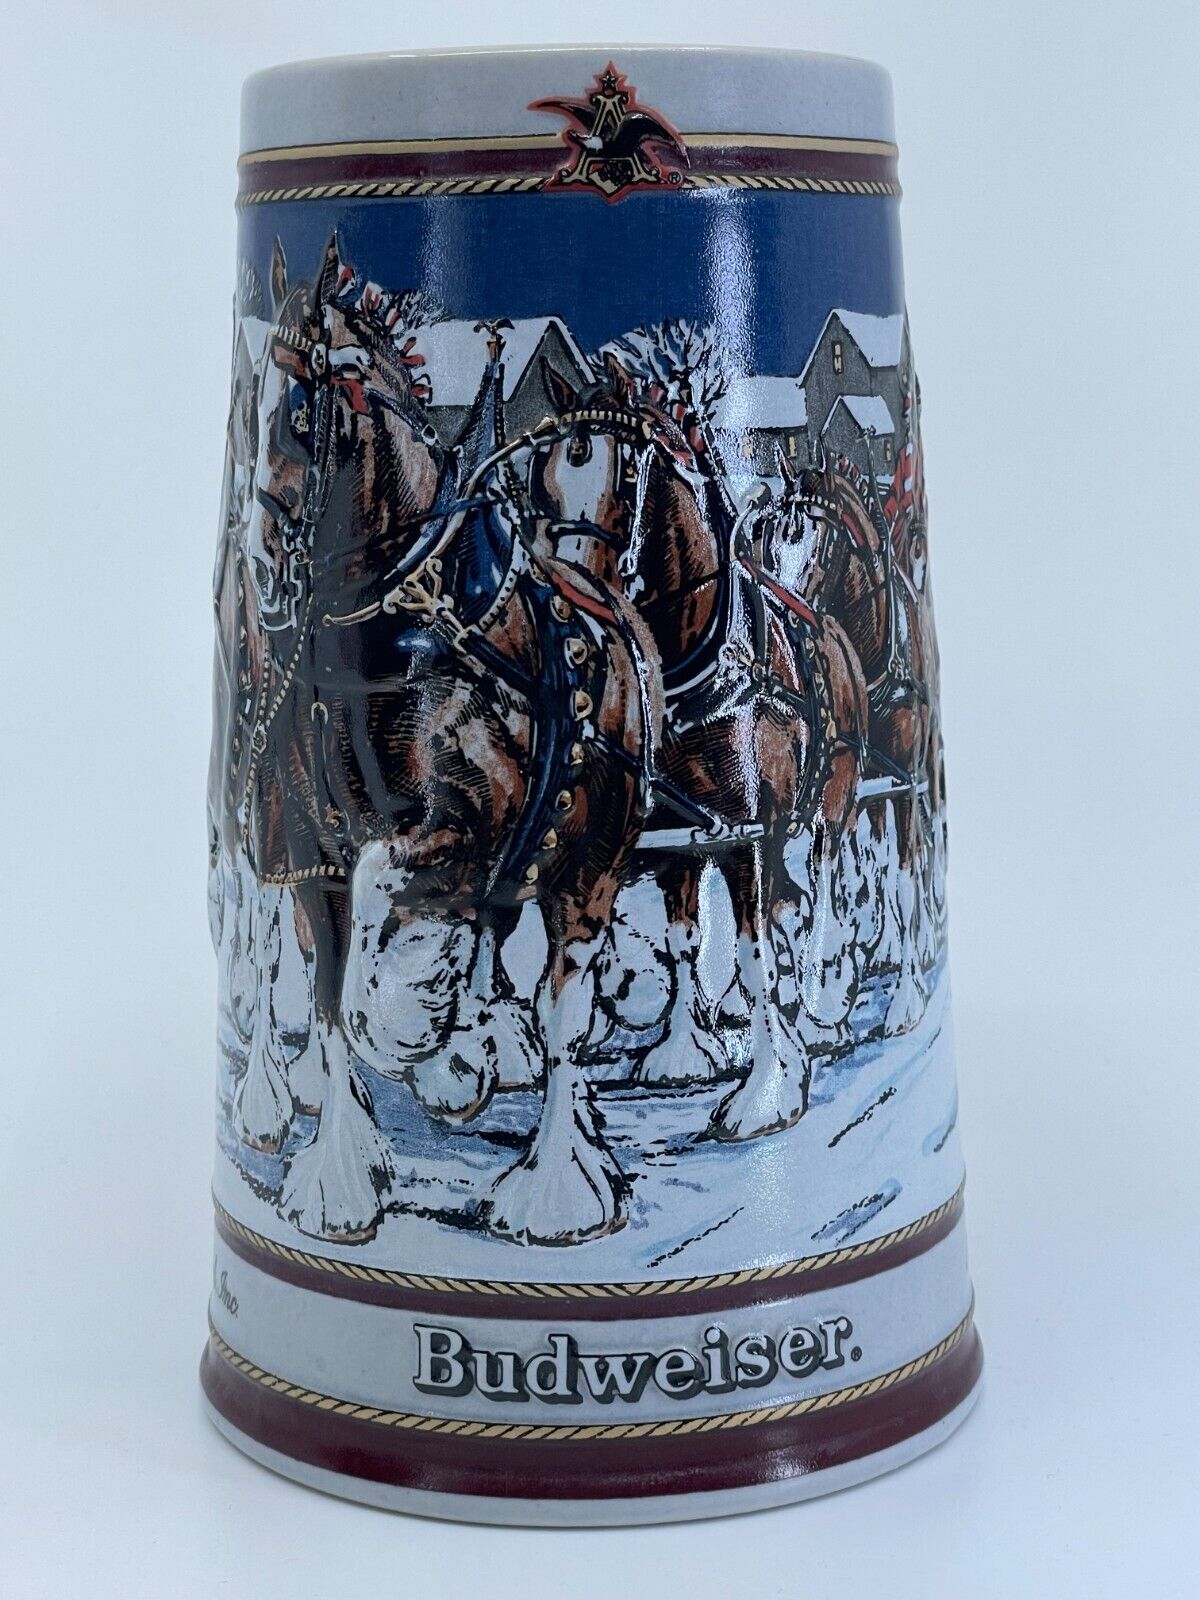 Vtg 1989 Anheuser Busch Budweiser Clydesdales Collector\'s Series Beer Stein Mug